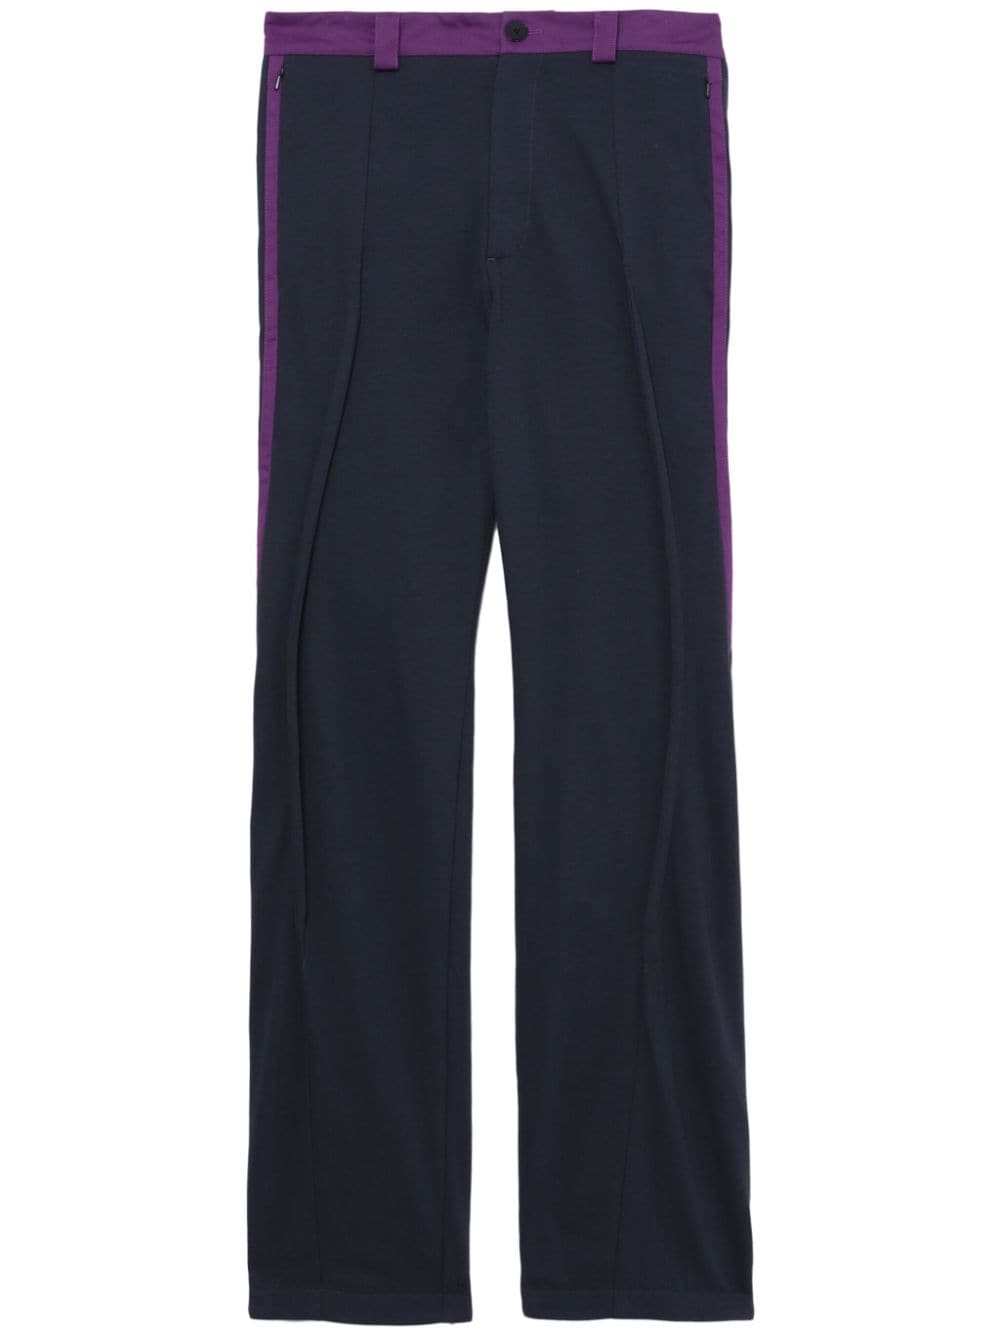 kiko kostadinov pantalon droit à design bicolore - gris